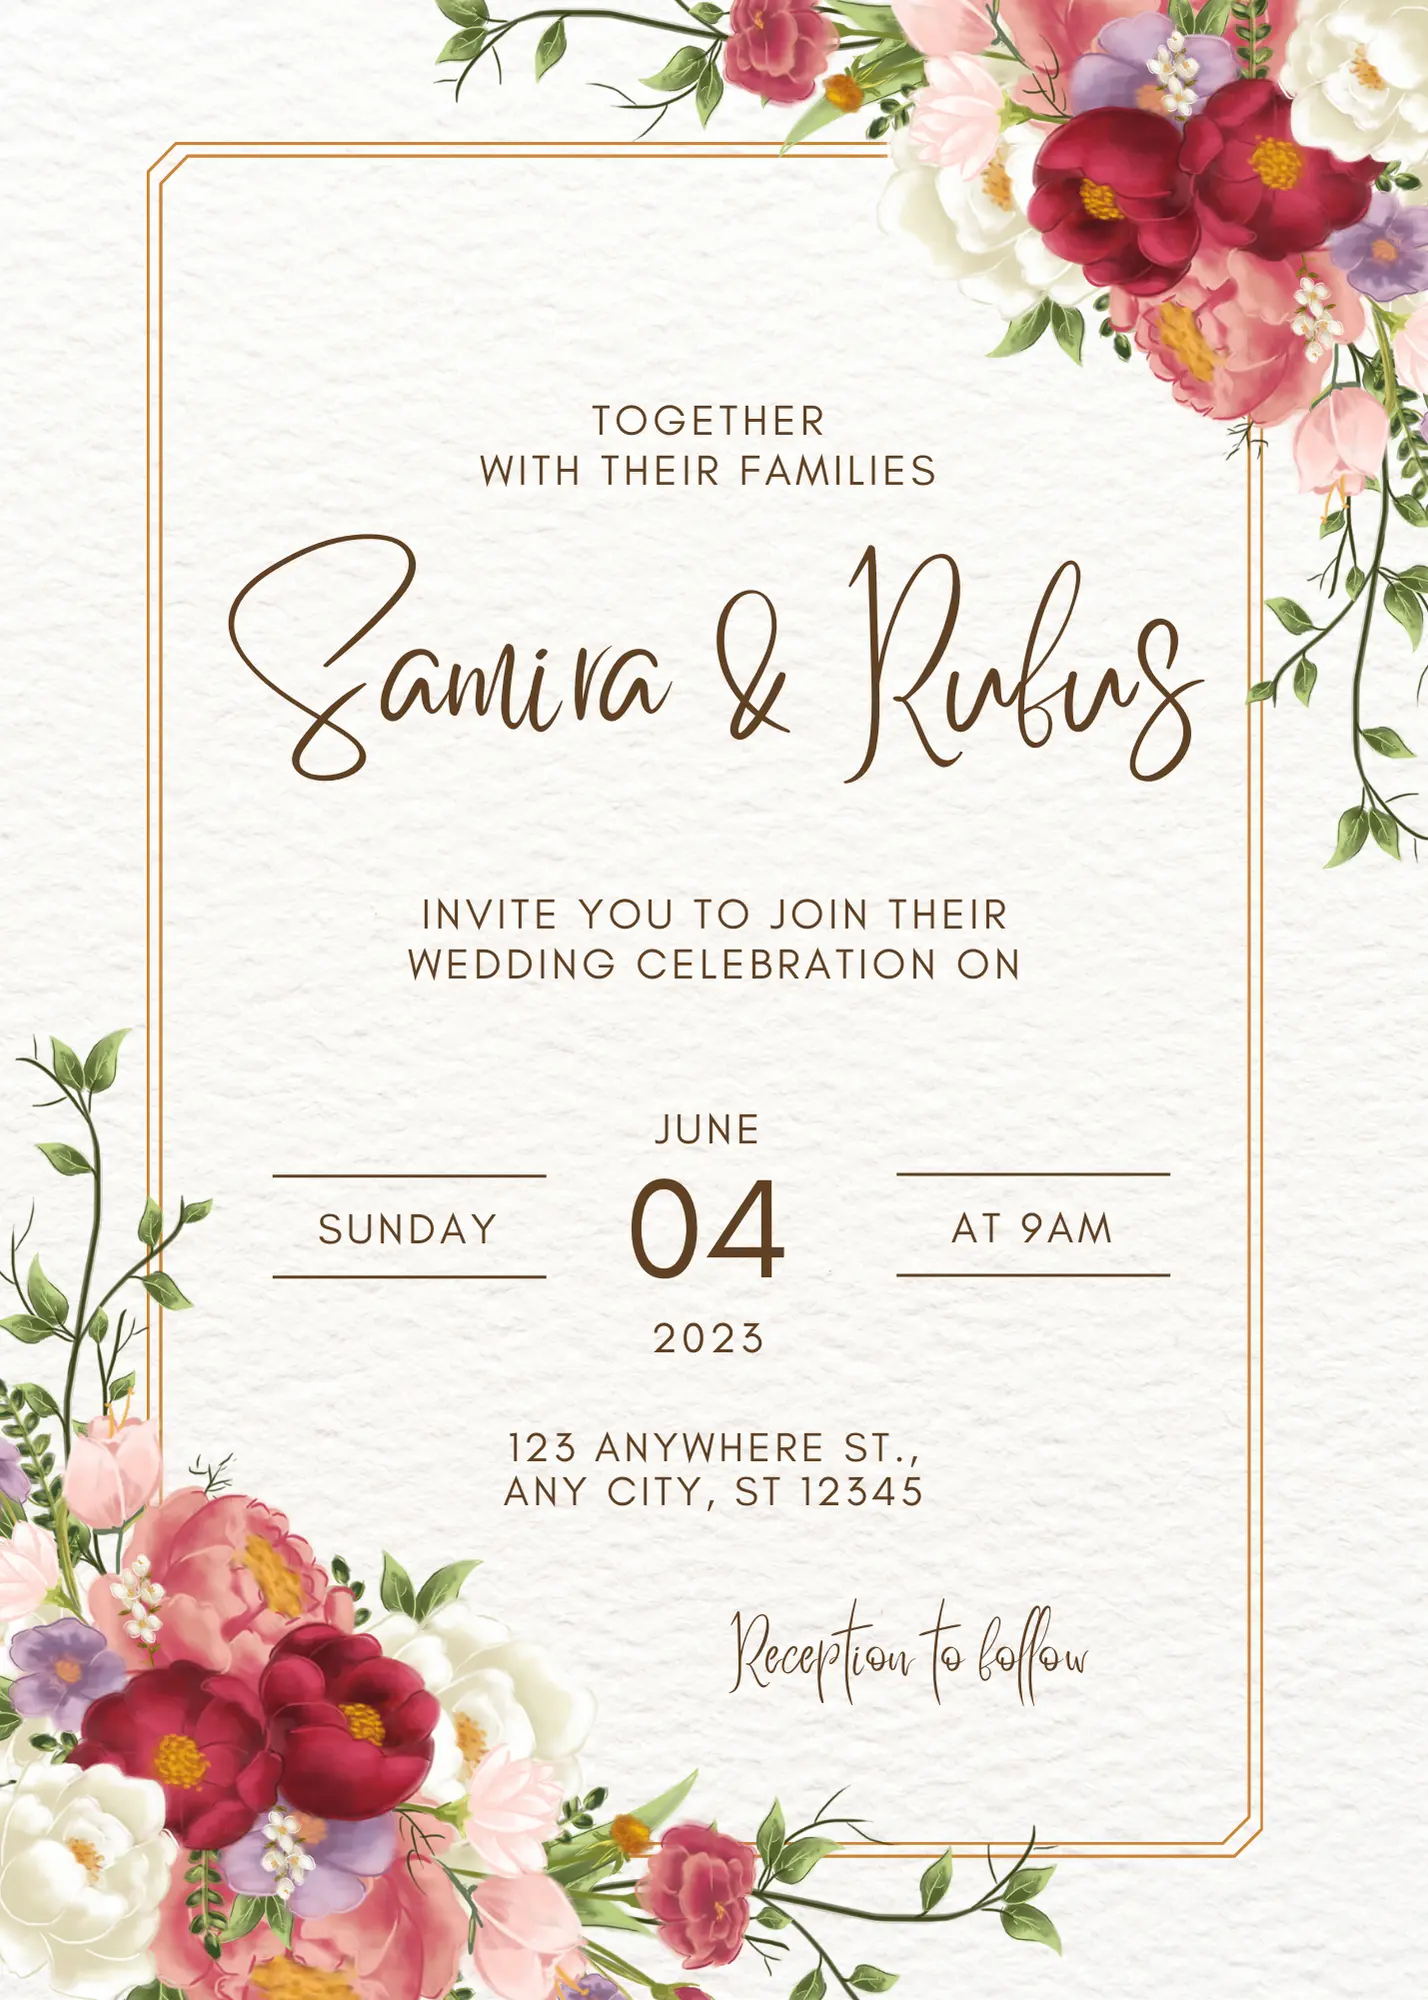 Why you should go for digital wedding invitations